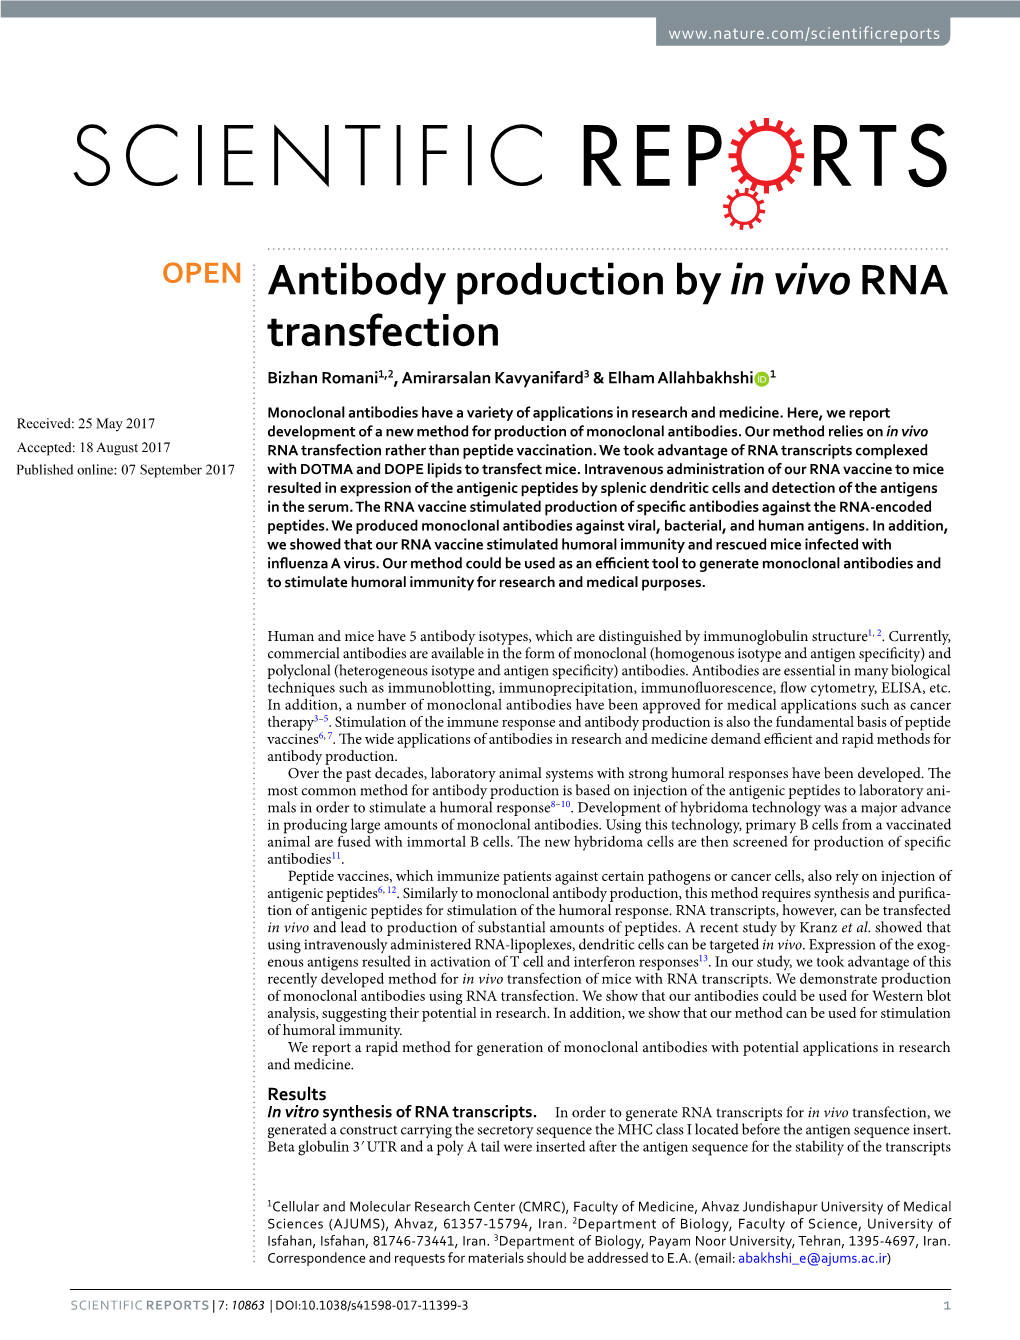 Antibody Production by in Vivo RNA Transfection Bizhan Romani1,2, Amirarsalan Kavyanifard3 & Elham Allahbakhshi 1